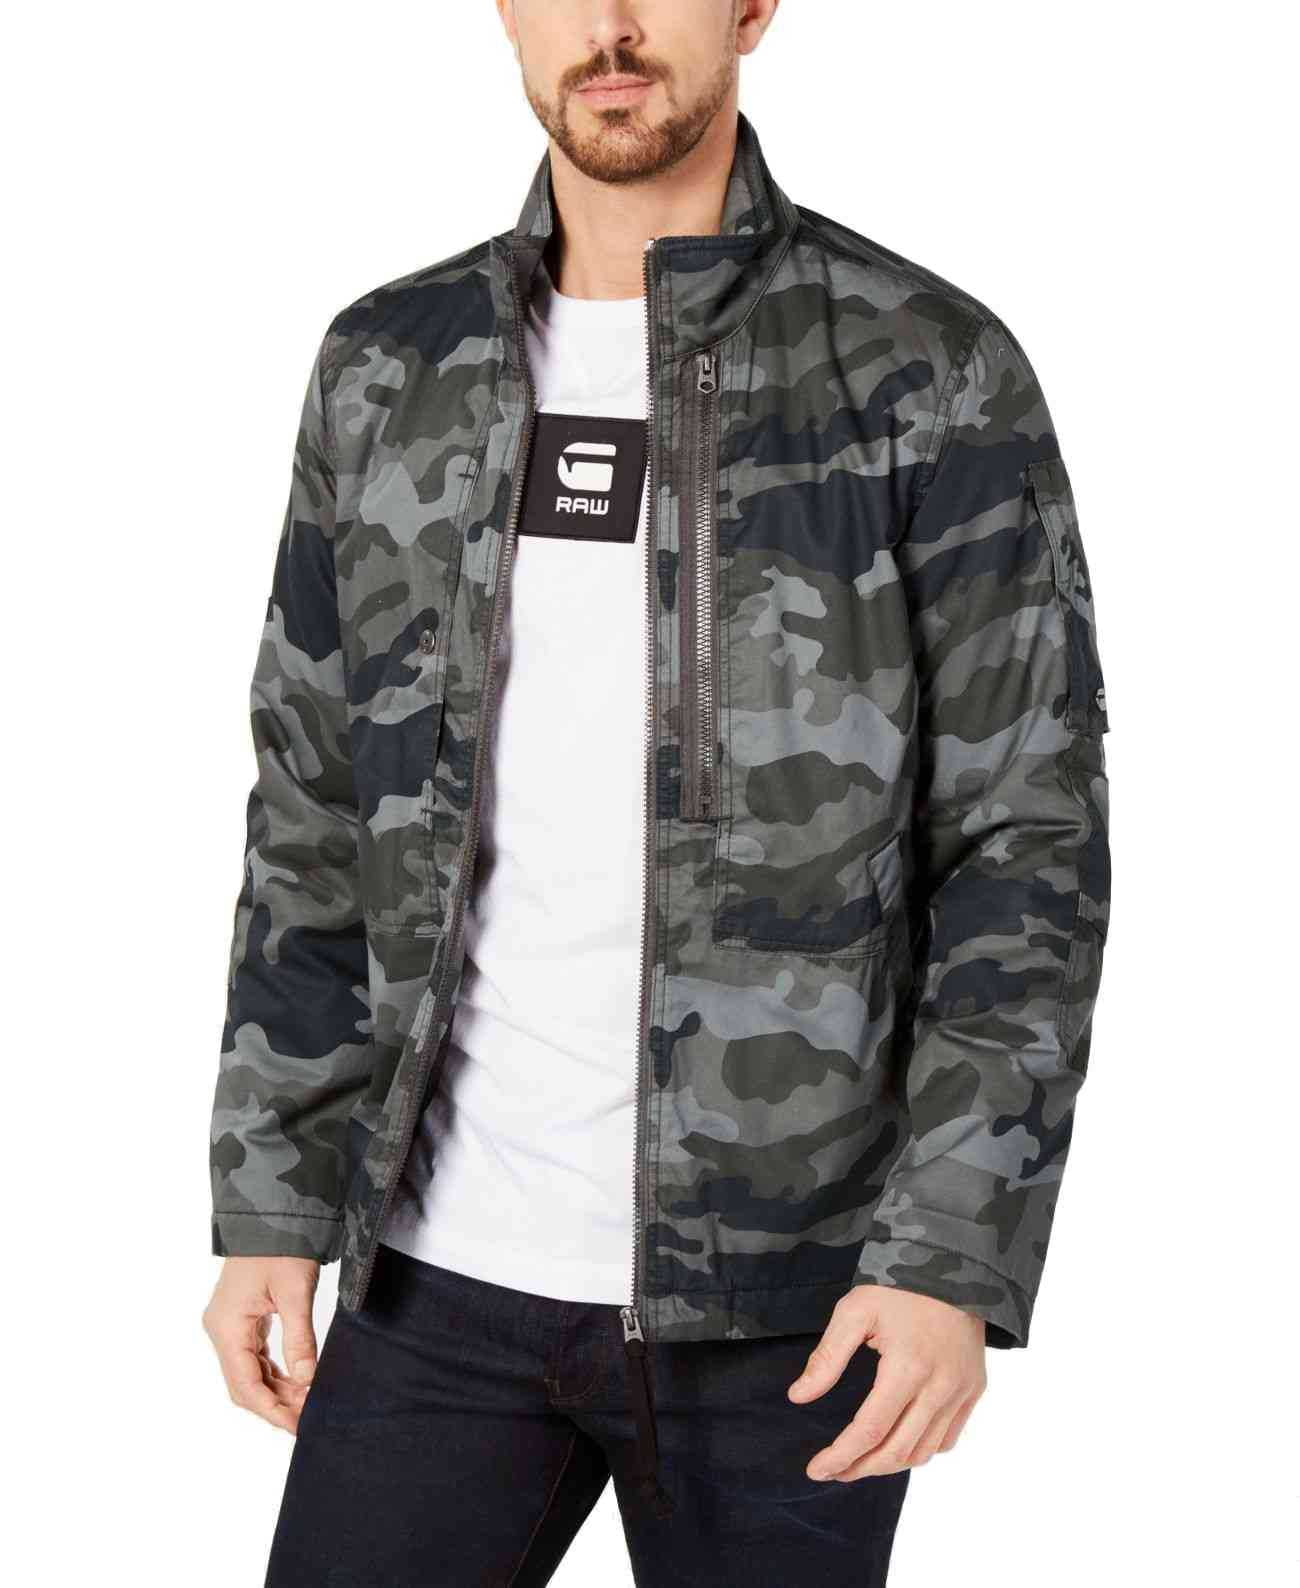 g star camouflage jacket